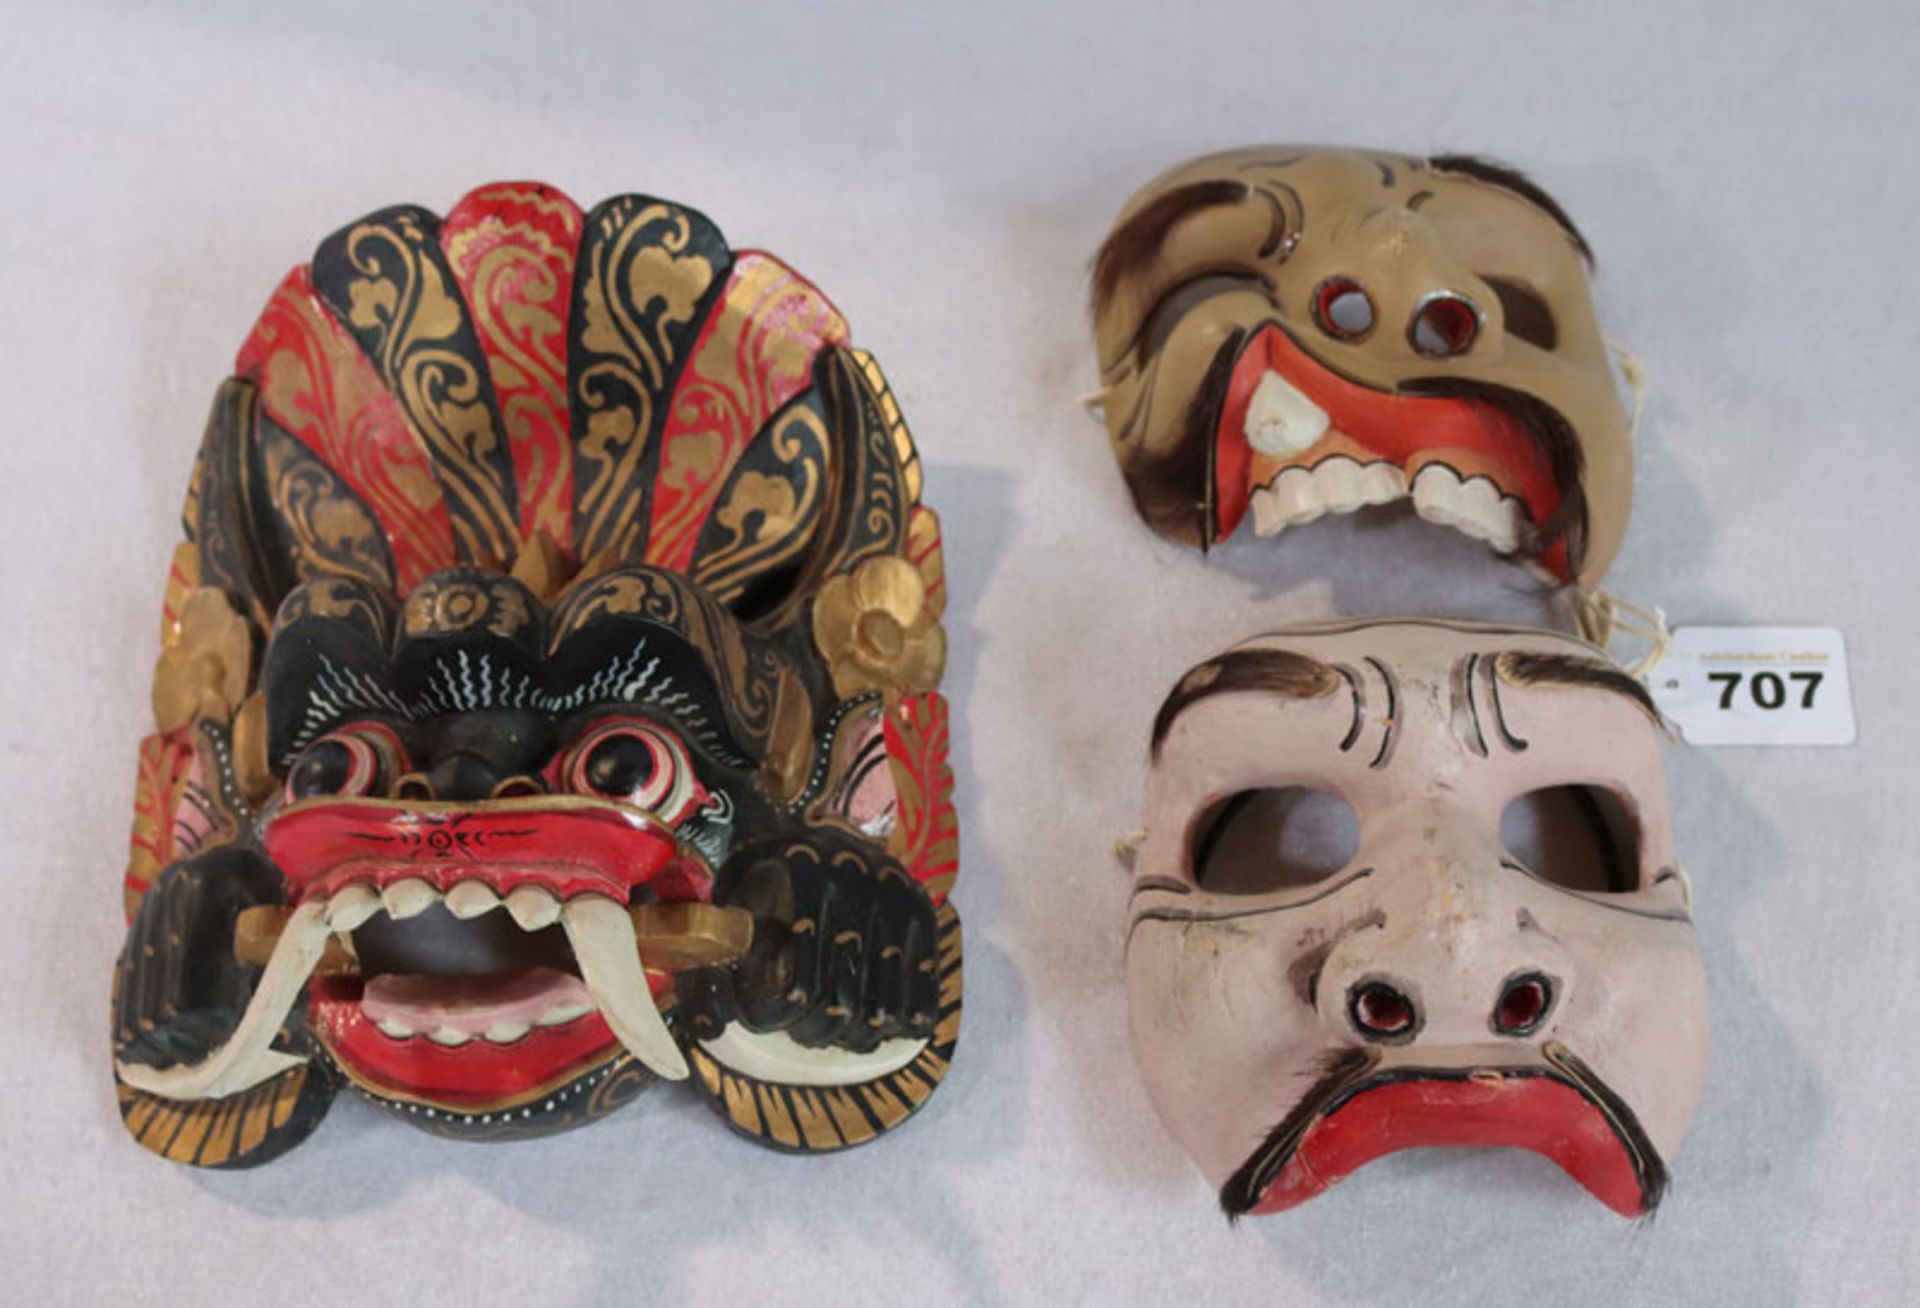 Holzmaske 'Baronmaske', Bali, 24 cm x 20 cm, und 2 Holz Halbmasken, bemalt, 14 cm x 13 cm, teils